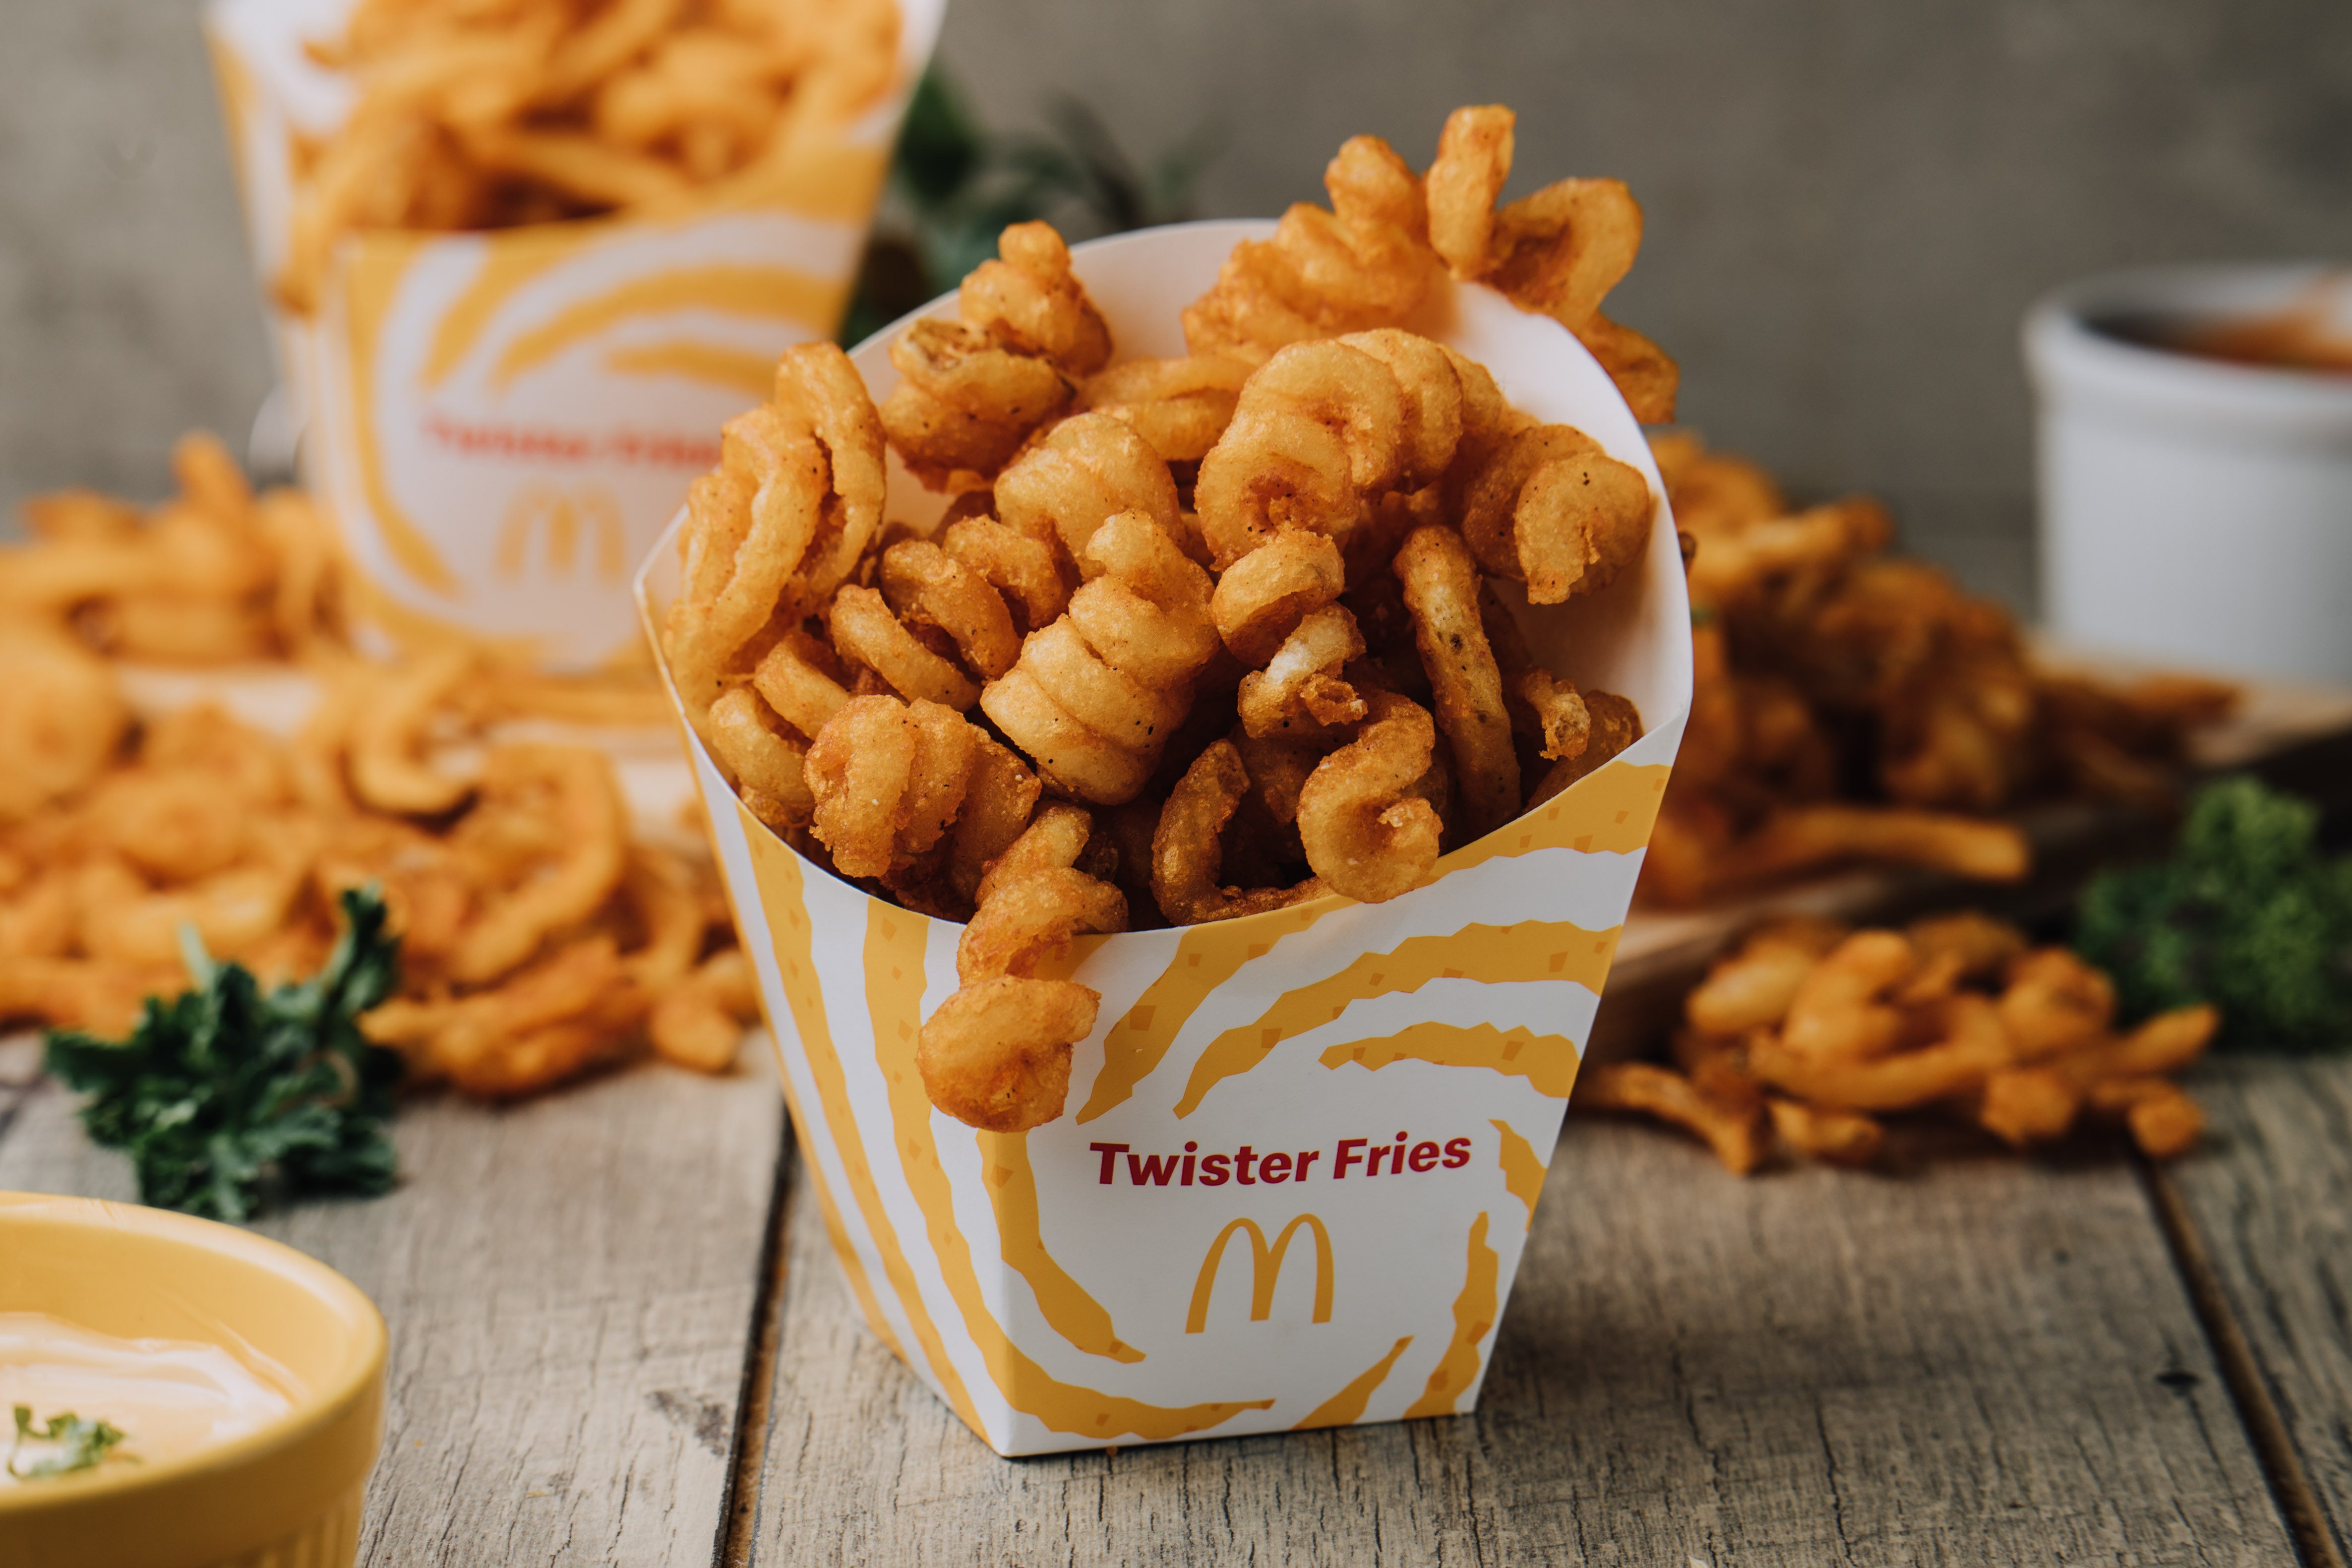 McDonald's brings back Twister Fries to menu